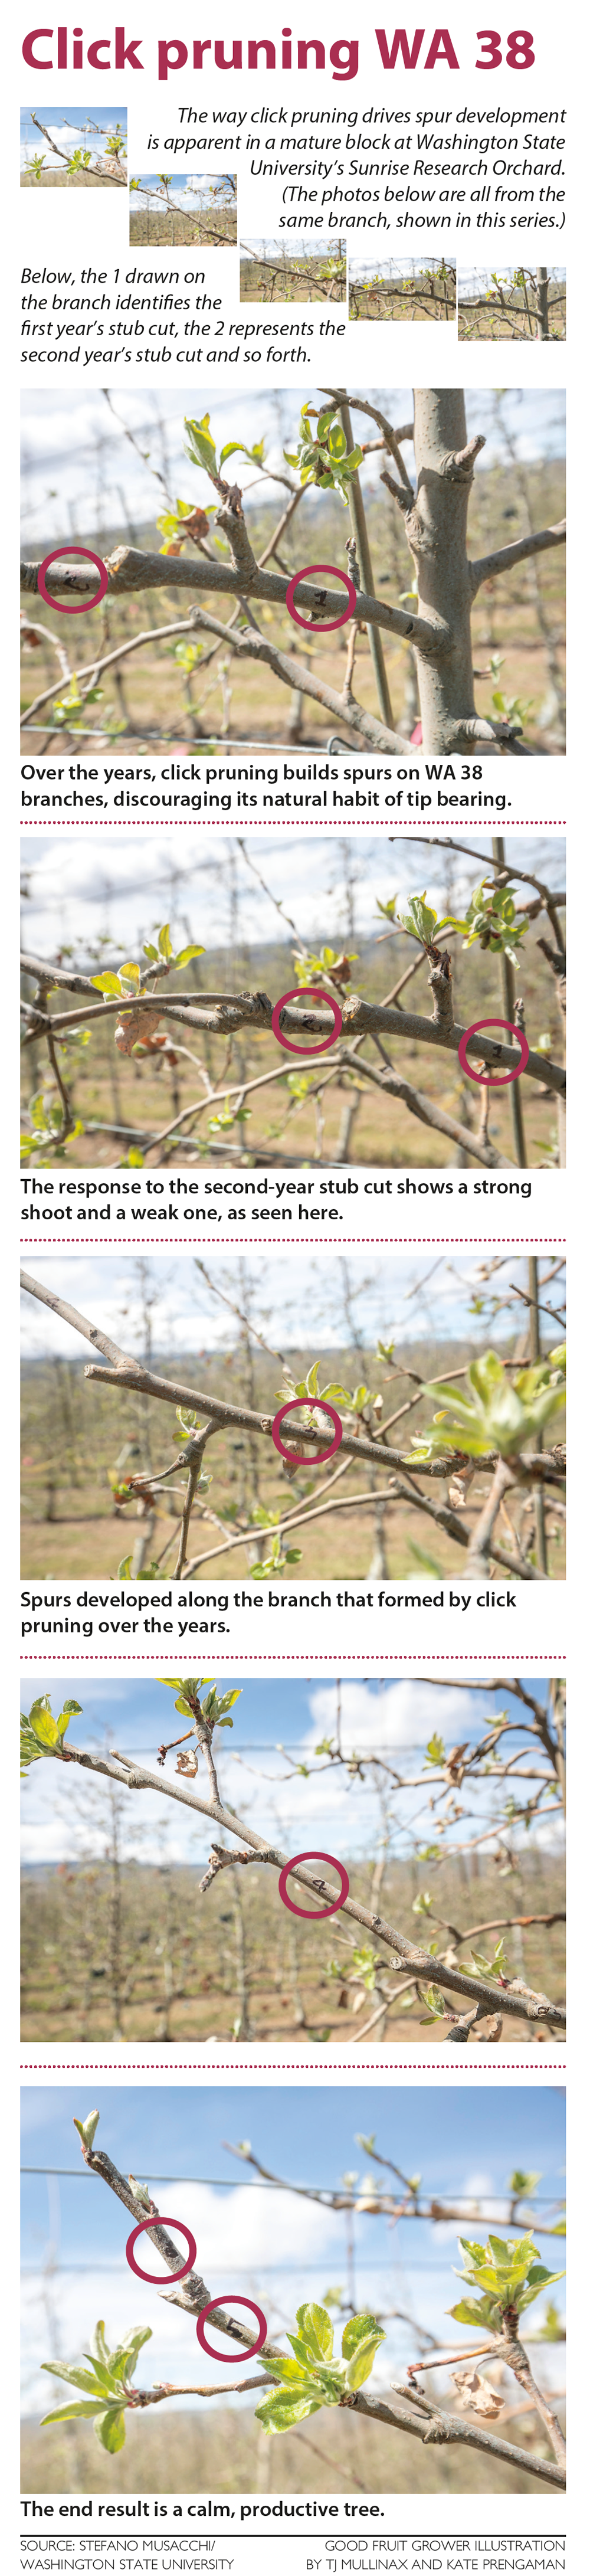 Click pruning WA 38 (Source: Stefano Musacchi/Washington State University; Good Fruit Grower illustration by TJ Mullinax and Kate Prengaman)